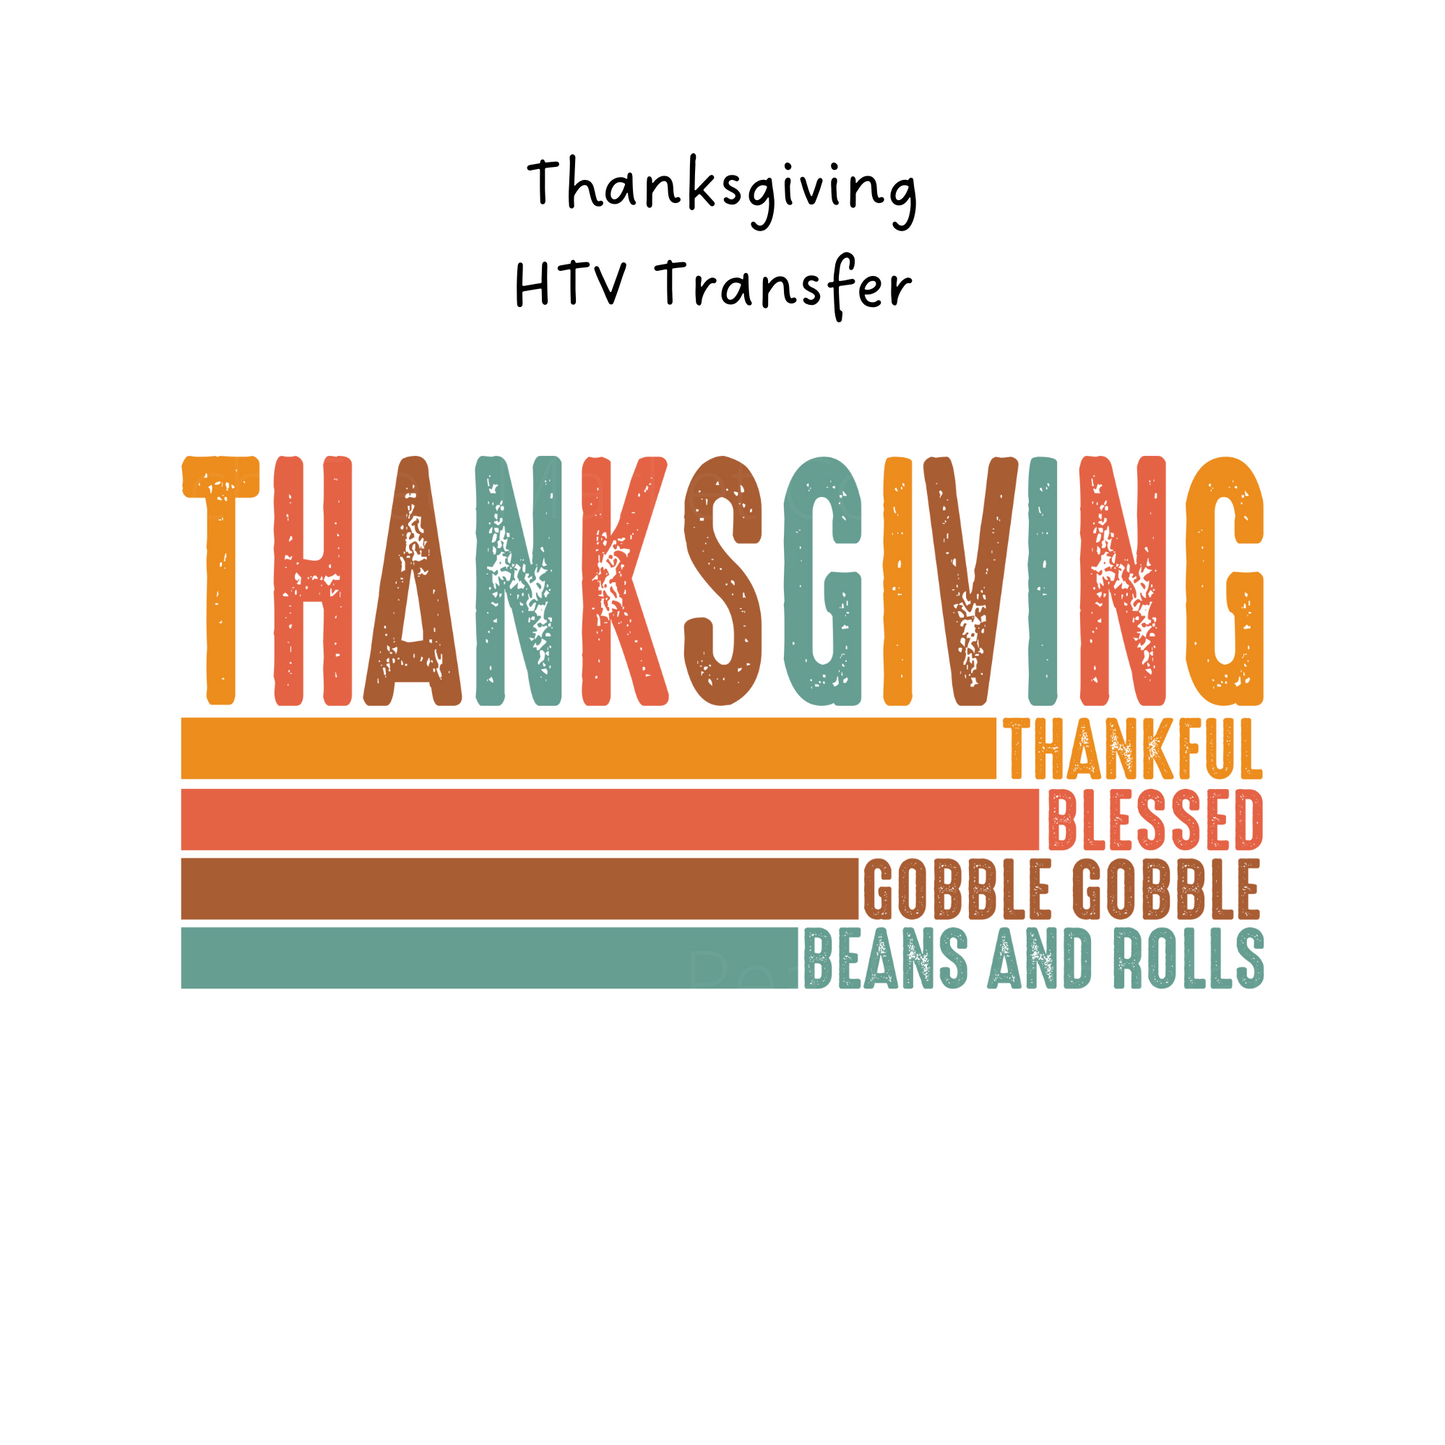 Thanksgiving HTV Transfer